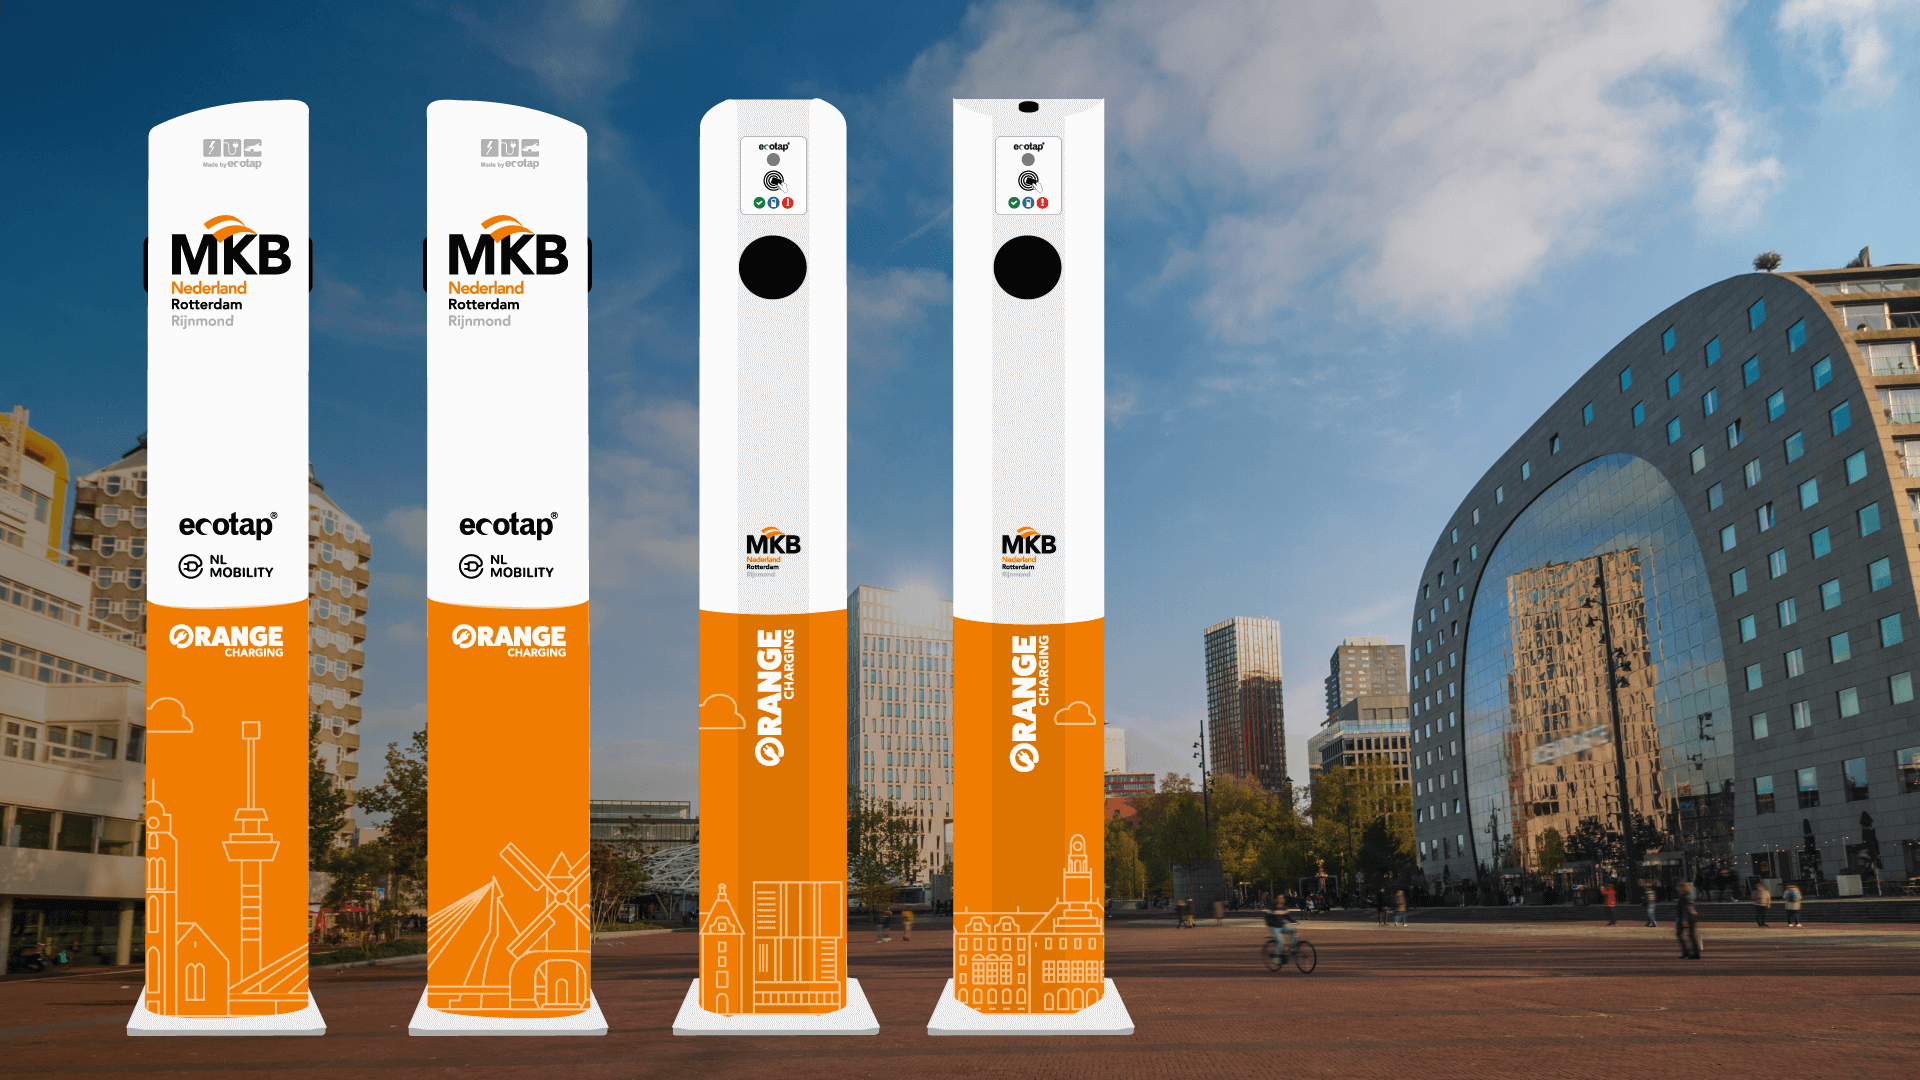 mkb-laadpaal-final-MKB Rotterdam laadpalen Orange charging